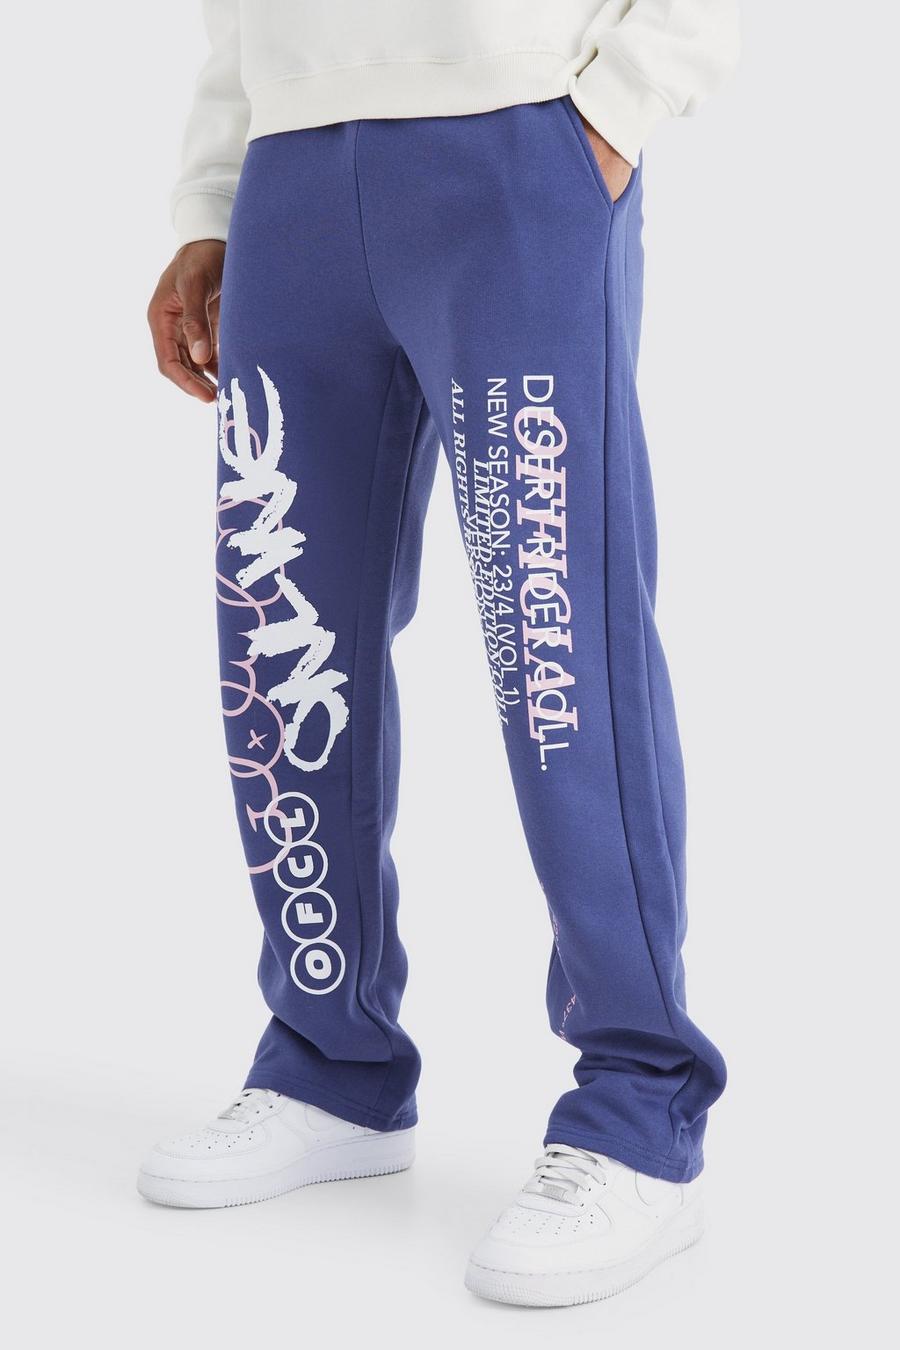 Pantalón deportivo Regular estampado con refuerzos, Slate blue